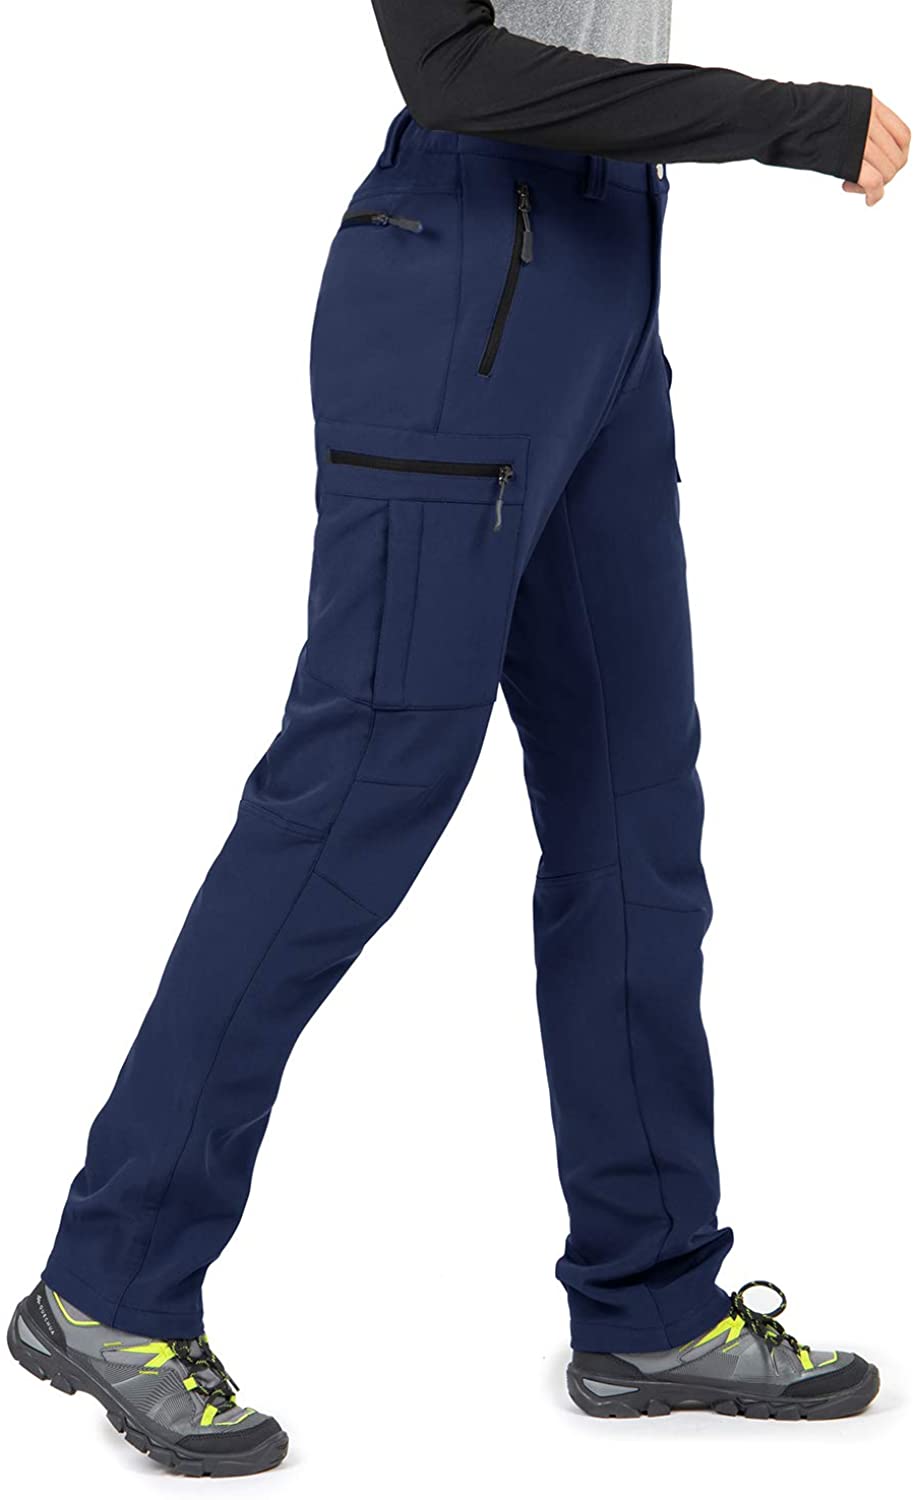 Womens Winter Pants Warm Fleece Lined Water Resistant Snow Skiing